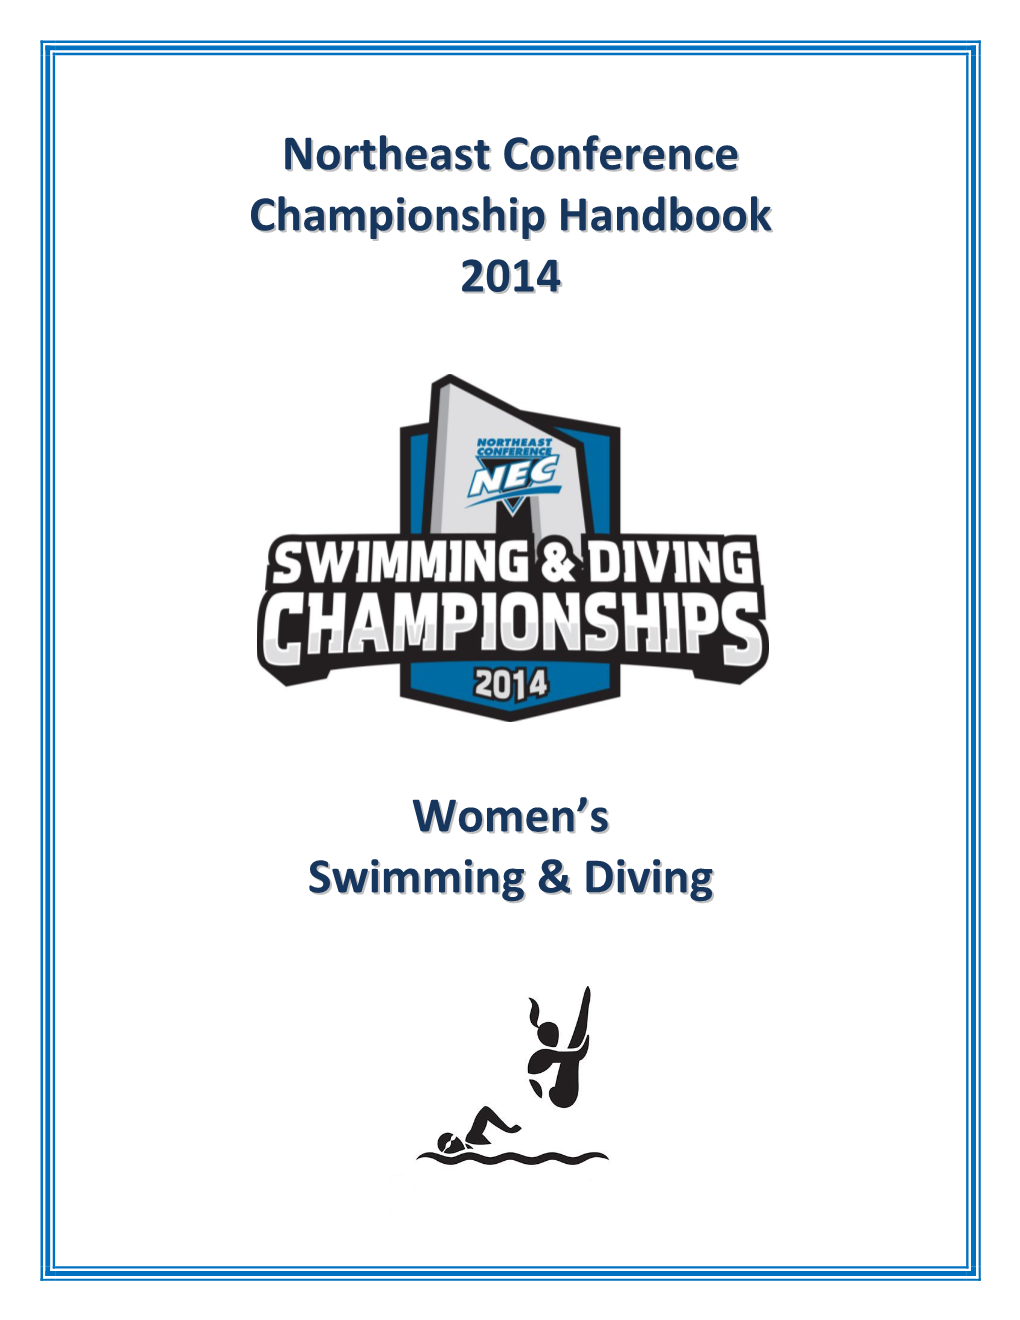 Northeast Conference Championship Handbook 2014 Women's